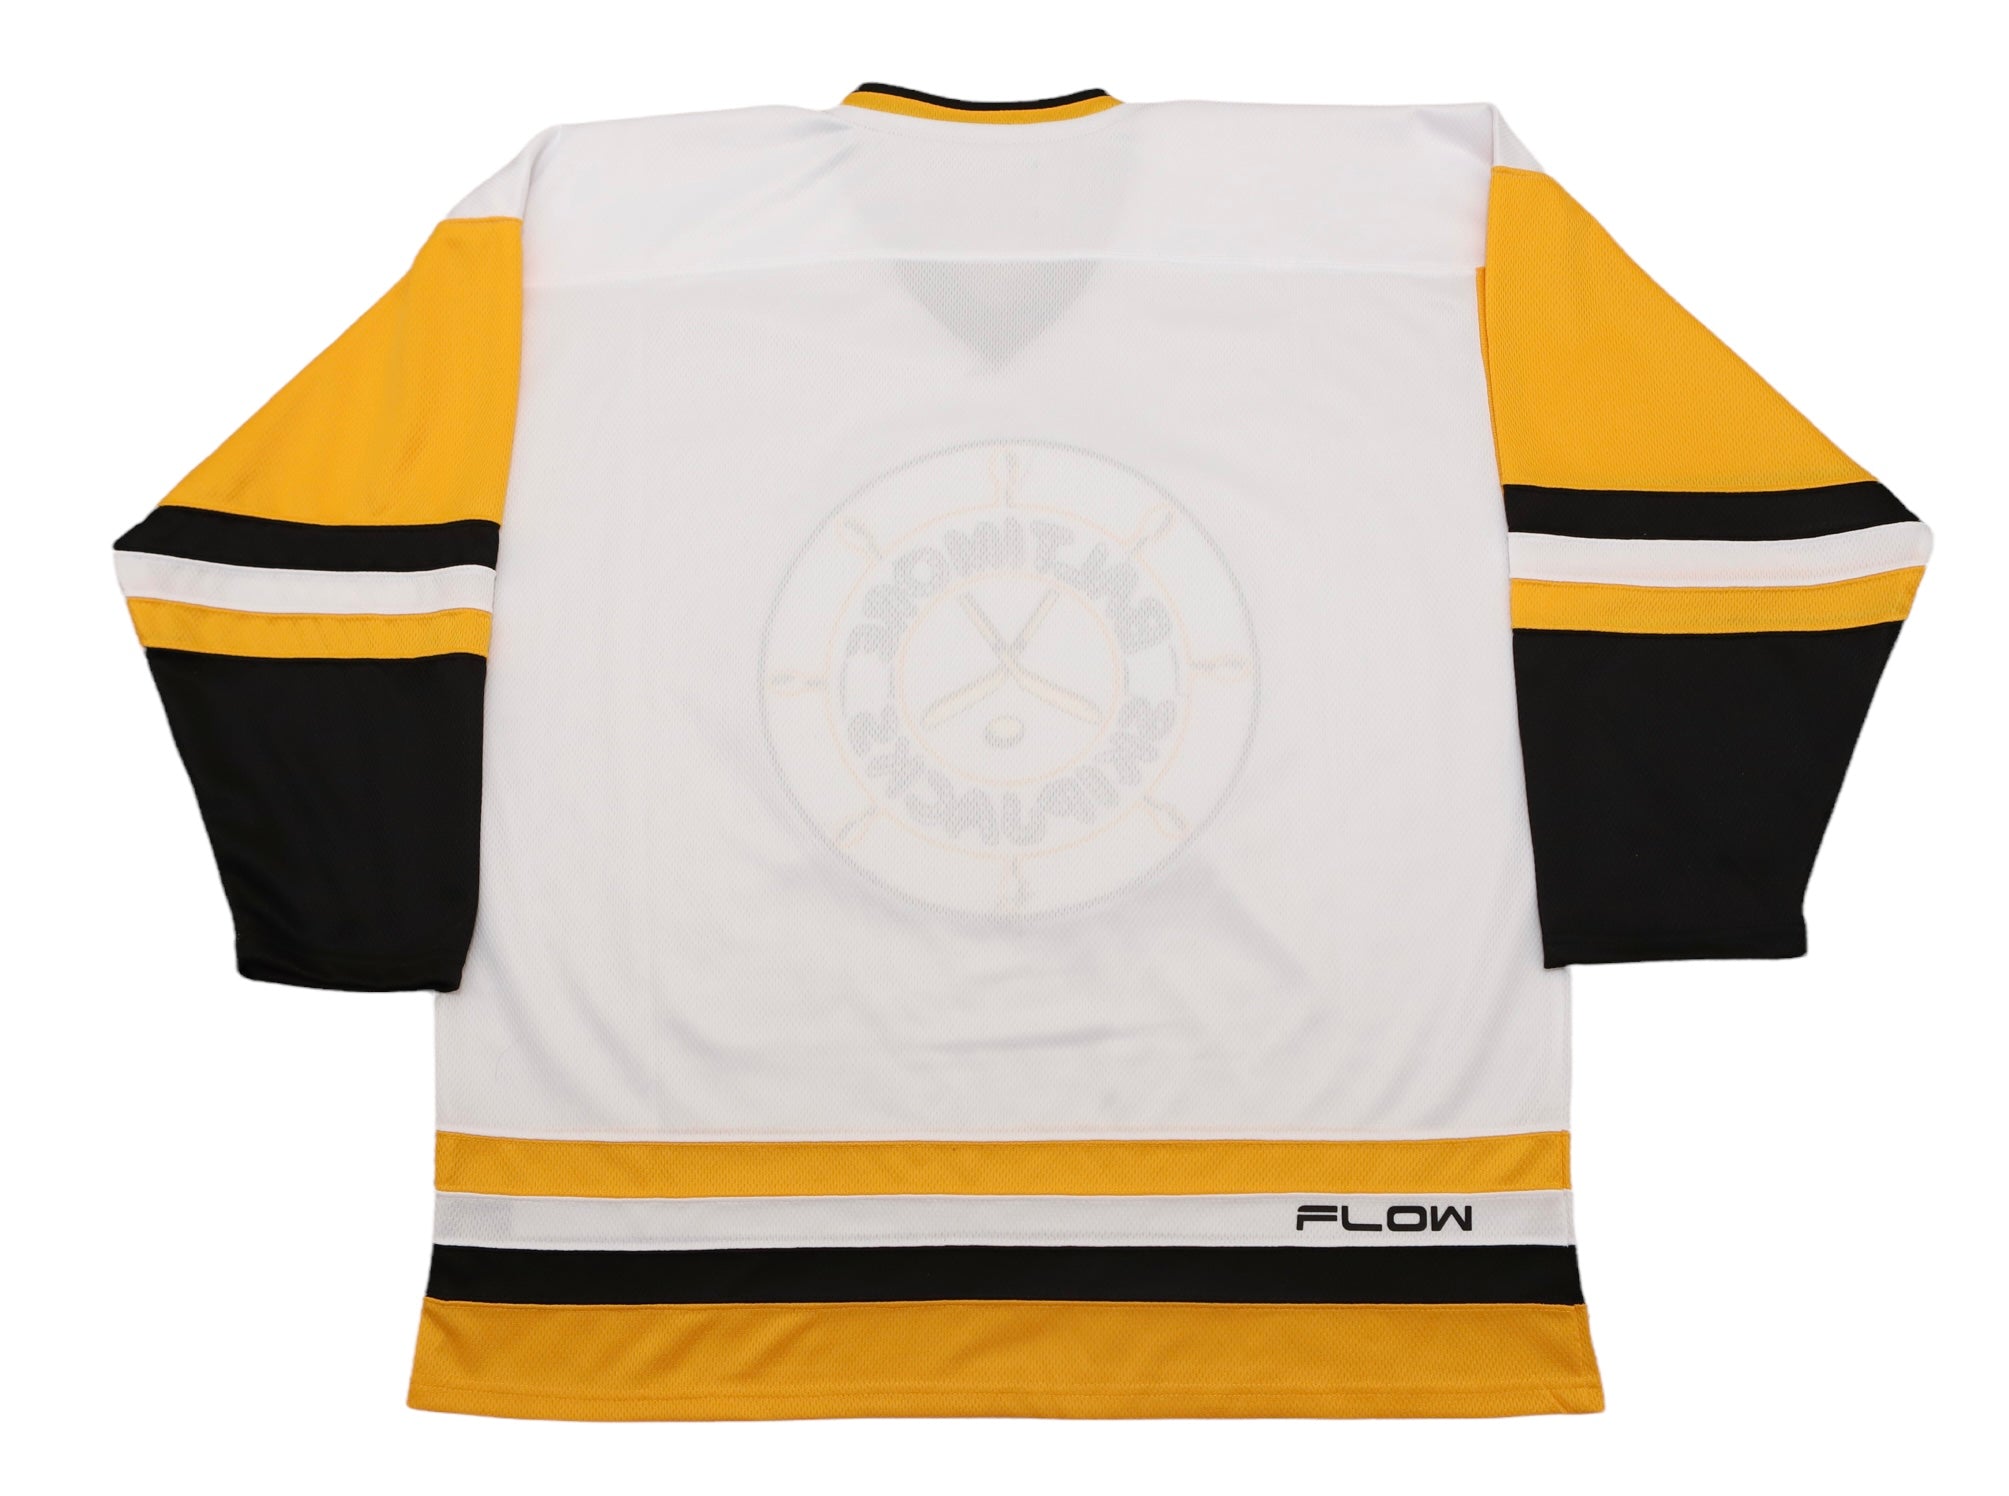 Pittsburgh Penguins NHL Heavyweight Blank Hockey Jersey